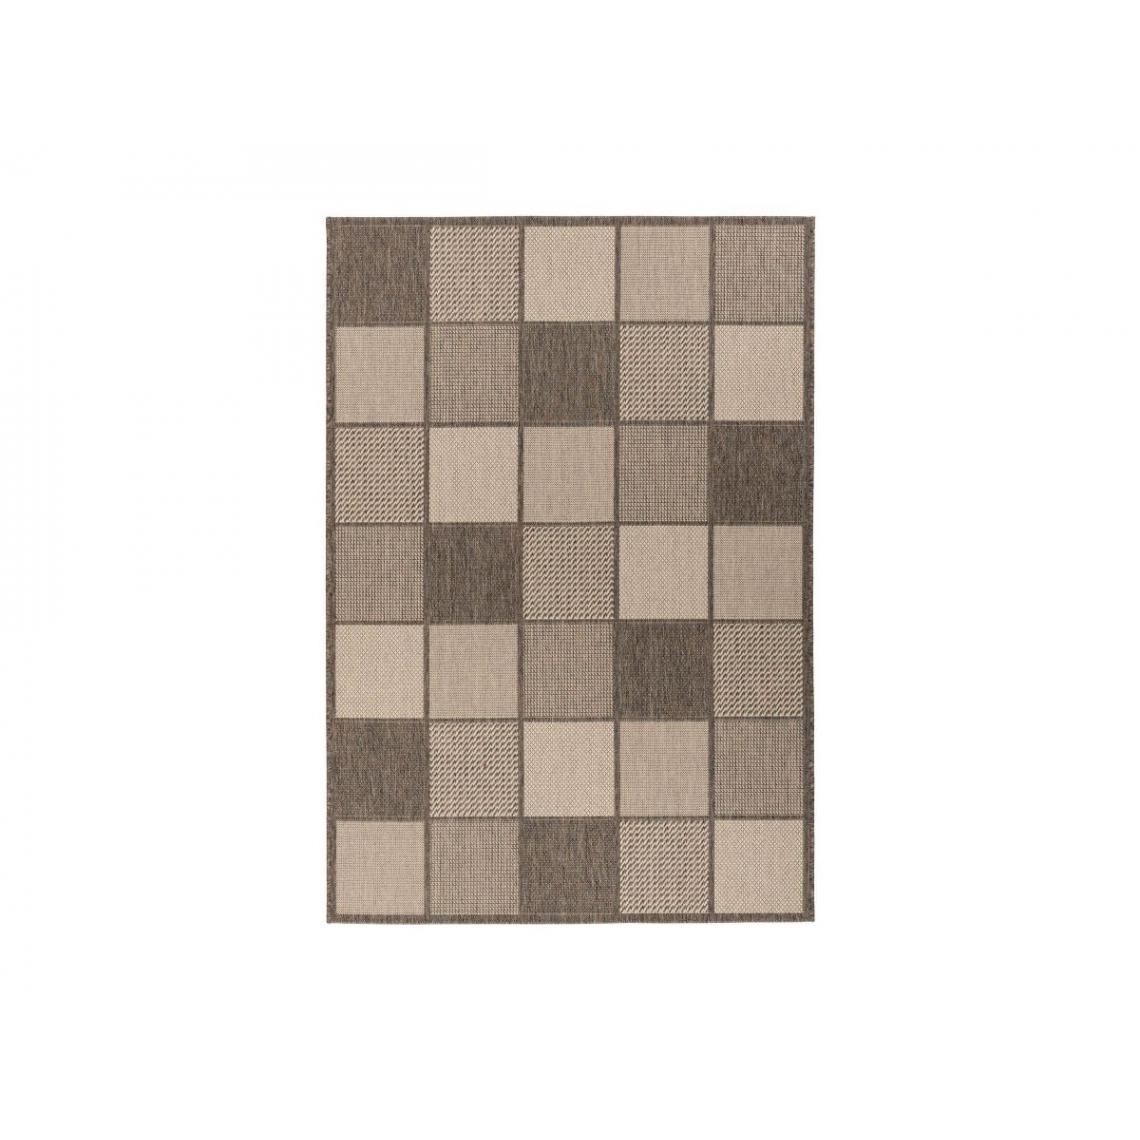 Bobochic - BOBOCHIC Tapis poil court rectangulaire YAKURA motif carreaux Beige 80x150 - Tapis